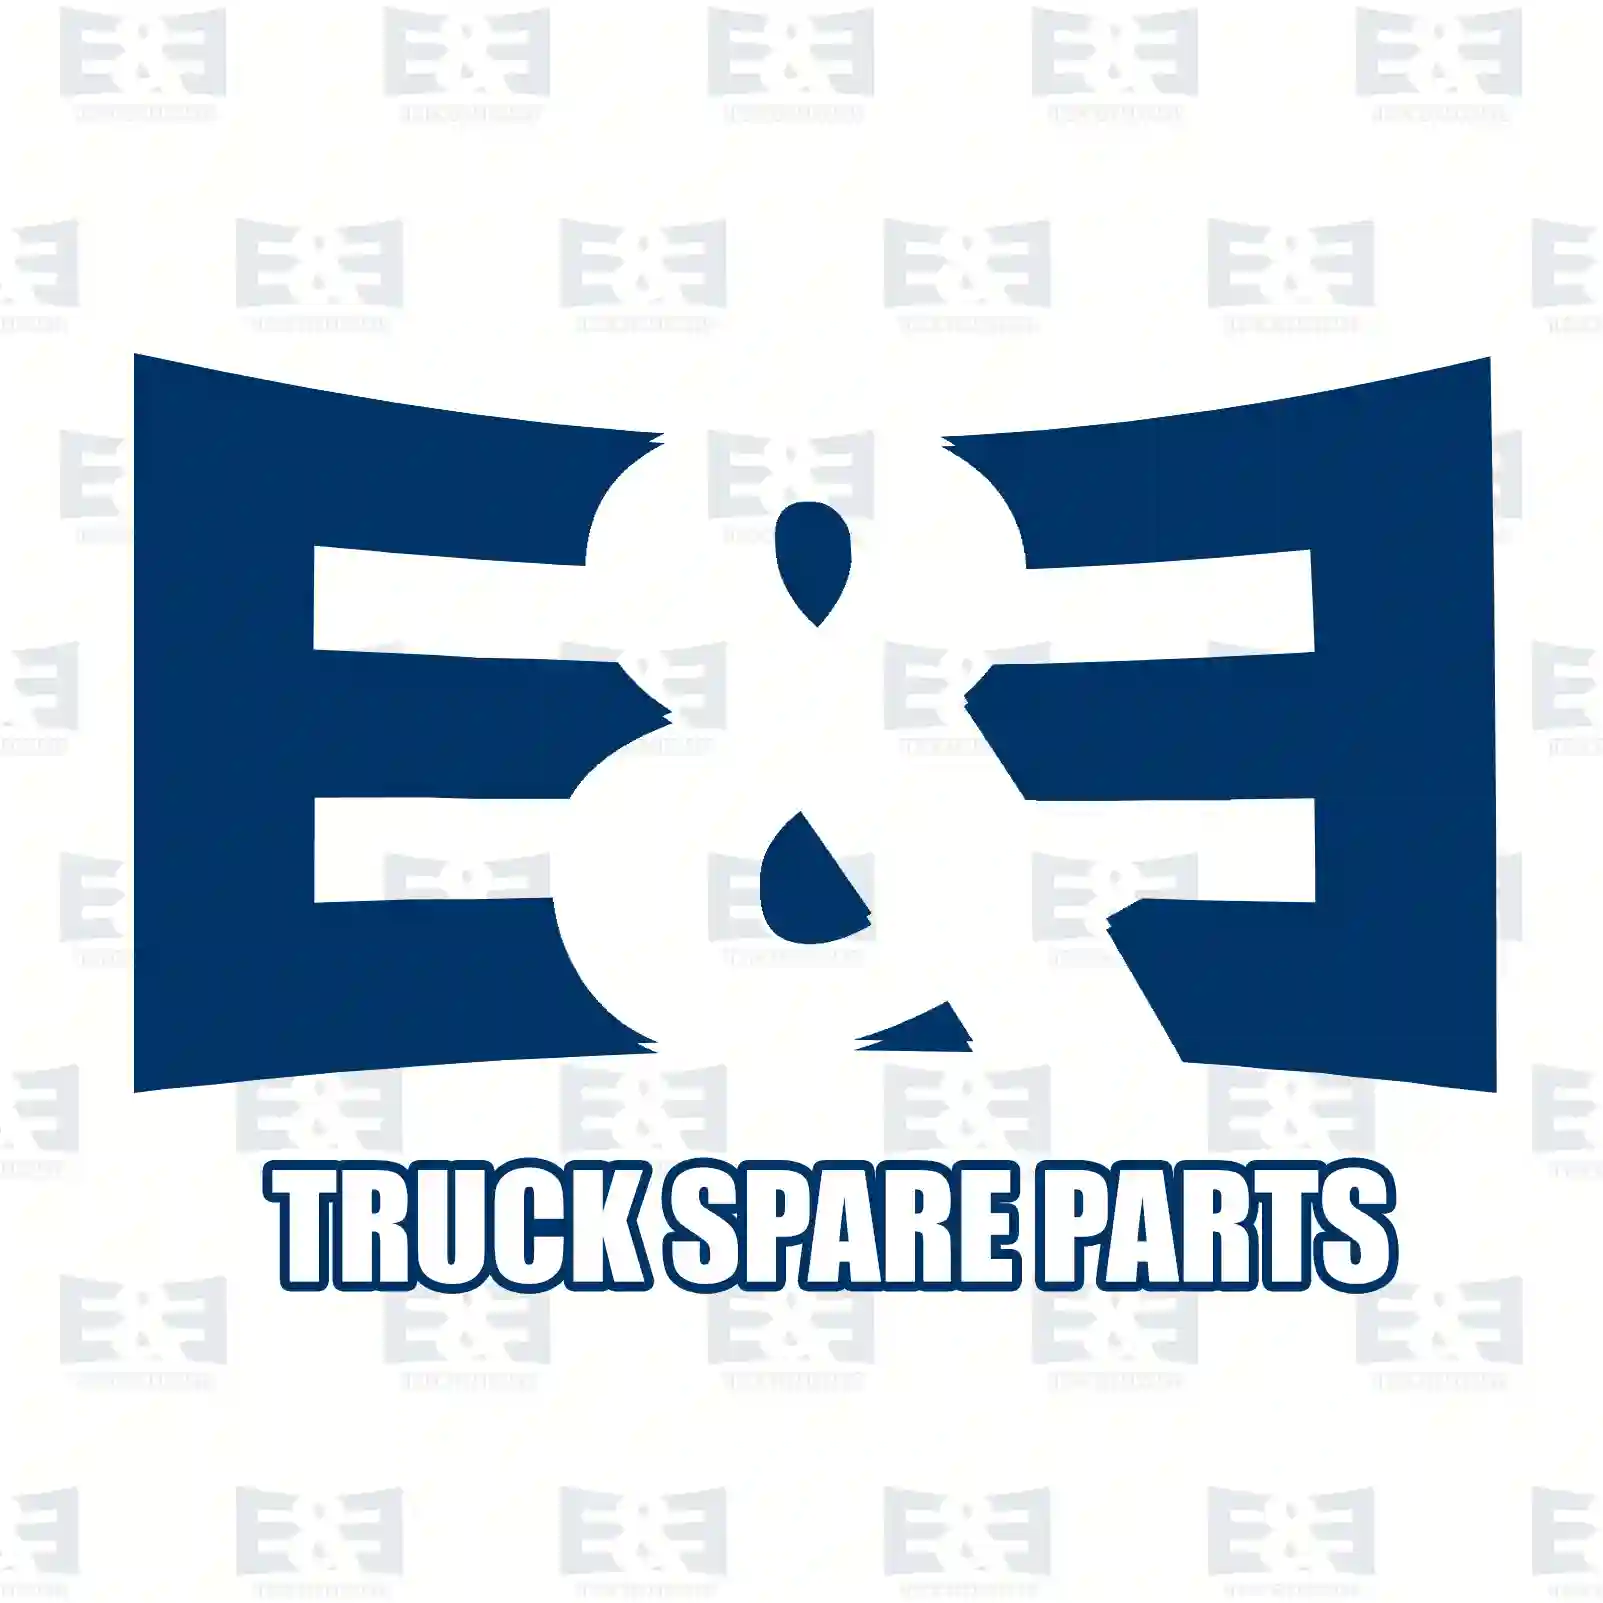  Rocker arm, intake || E&E Truck Spare Parts | Truck Spare Parts, Auotomotive Spare Parts